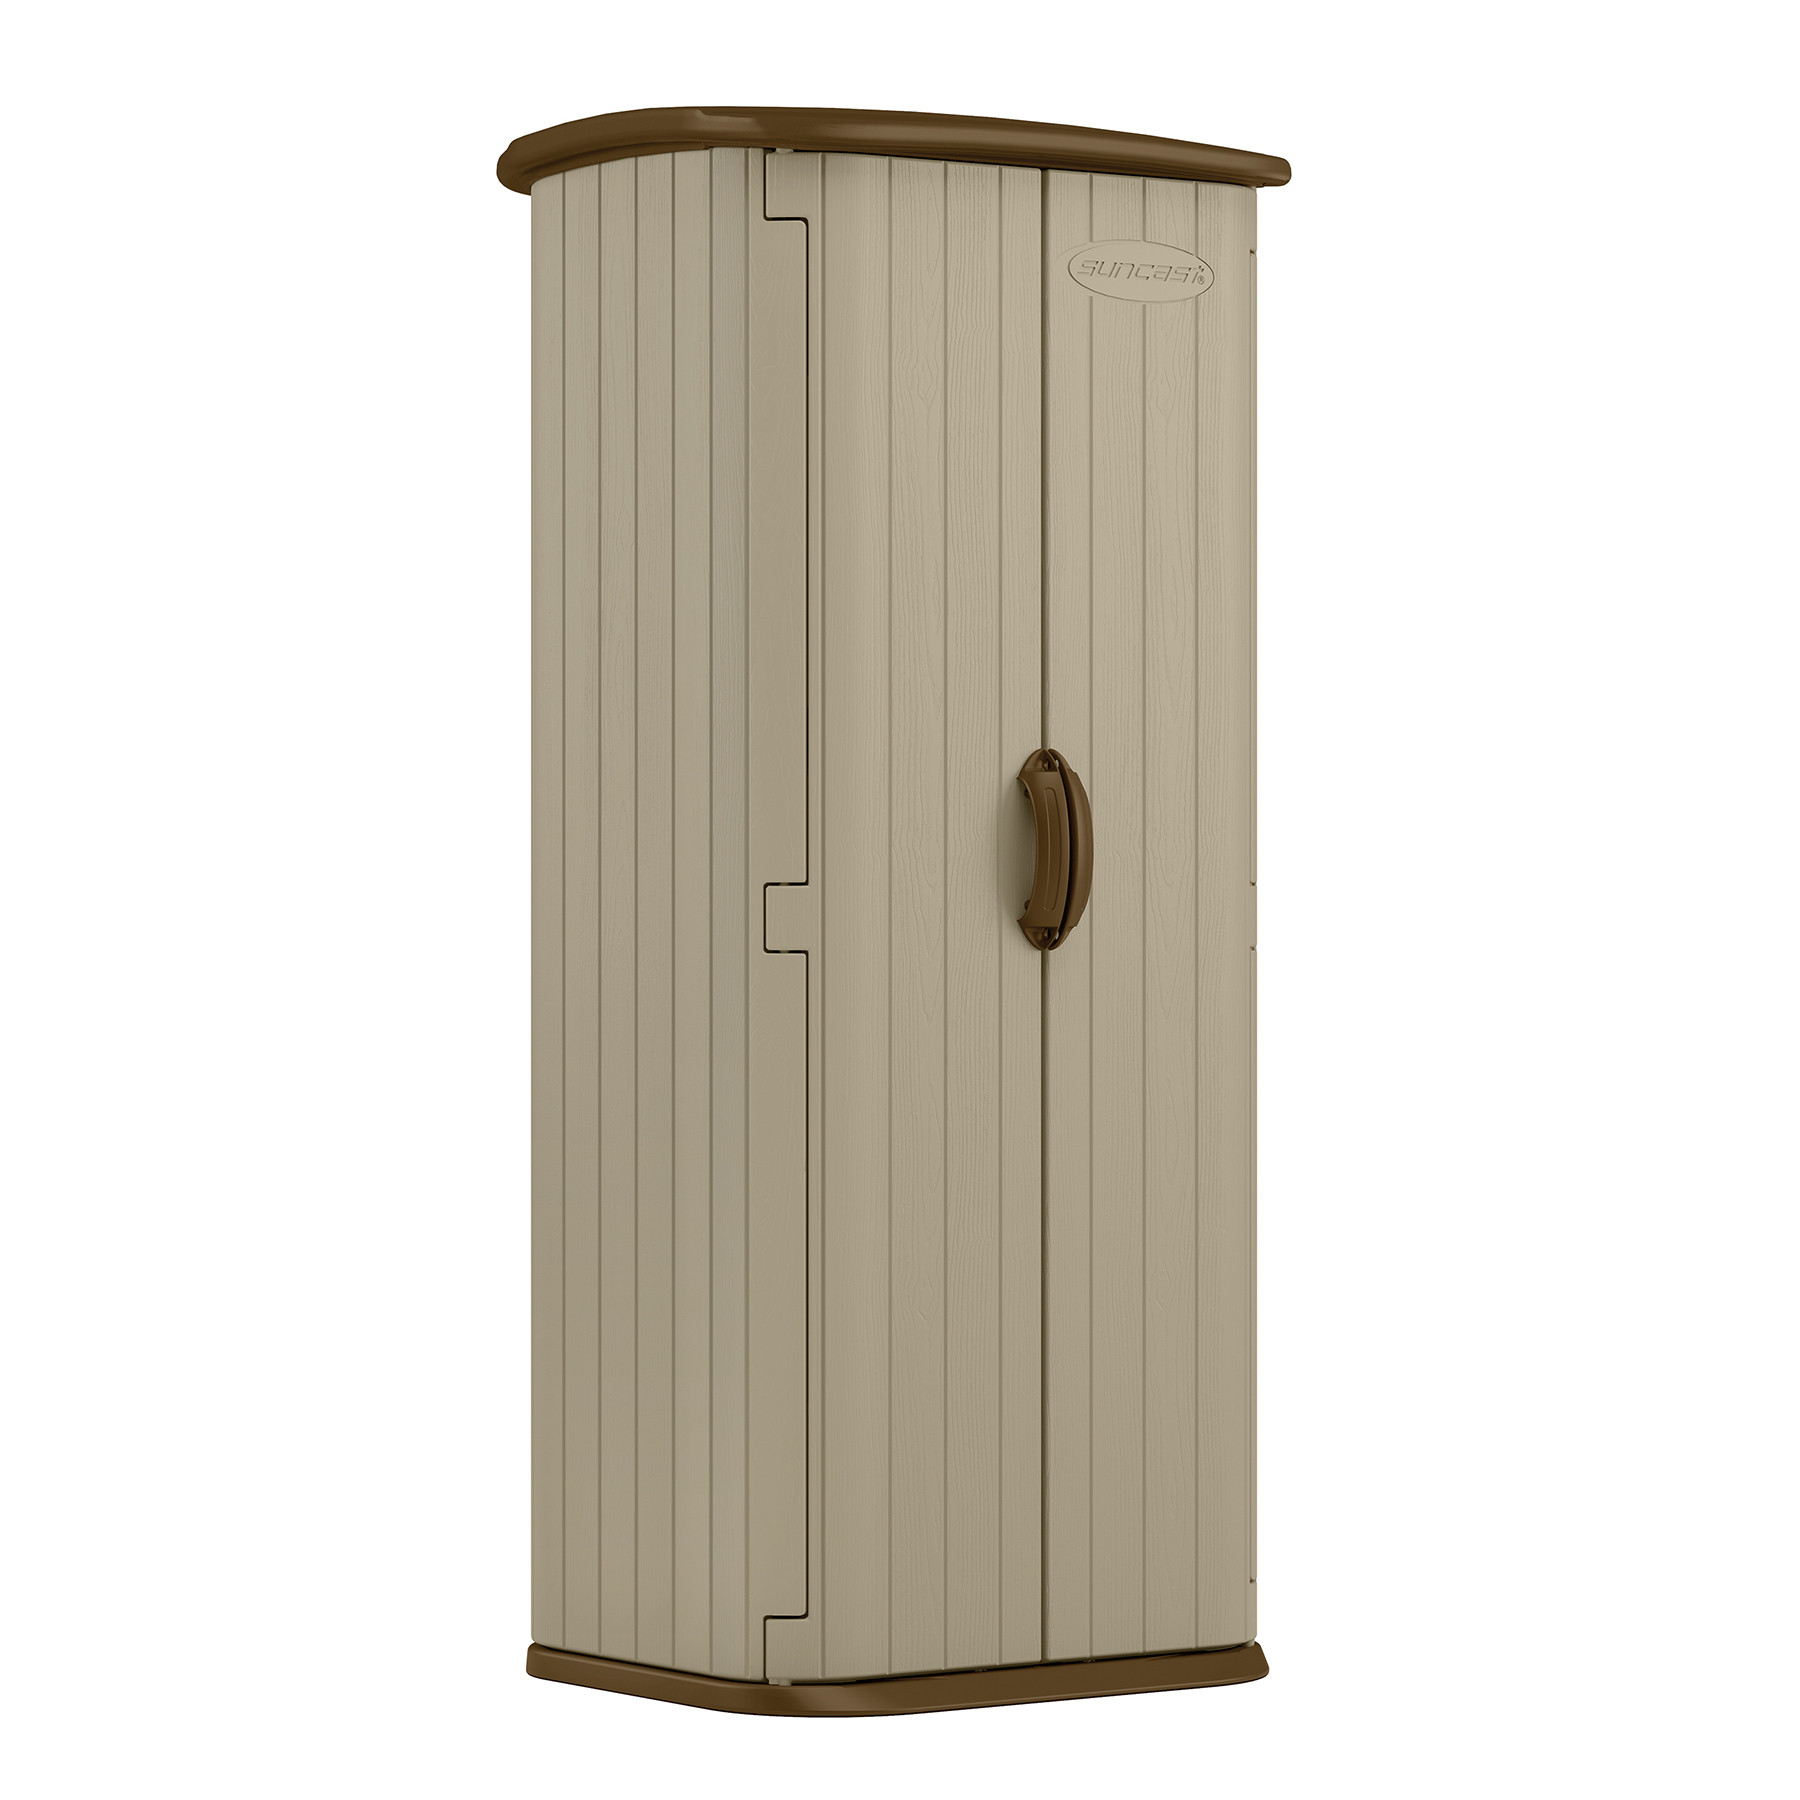 Best ideas about Suncast Vertical Storage Shed
. Save or Pin Suncast 20 cu ft Vertical Storage Shed Lawn & Garden Now.